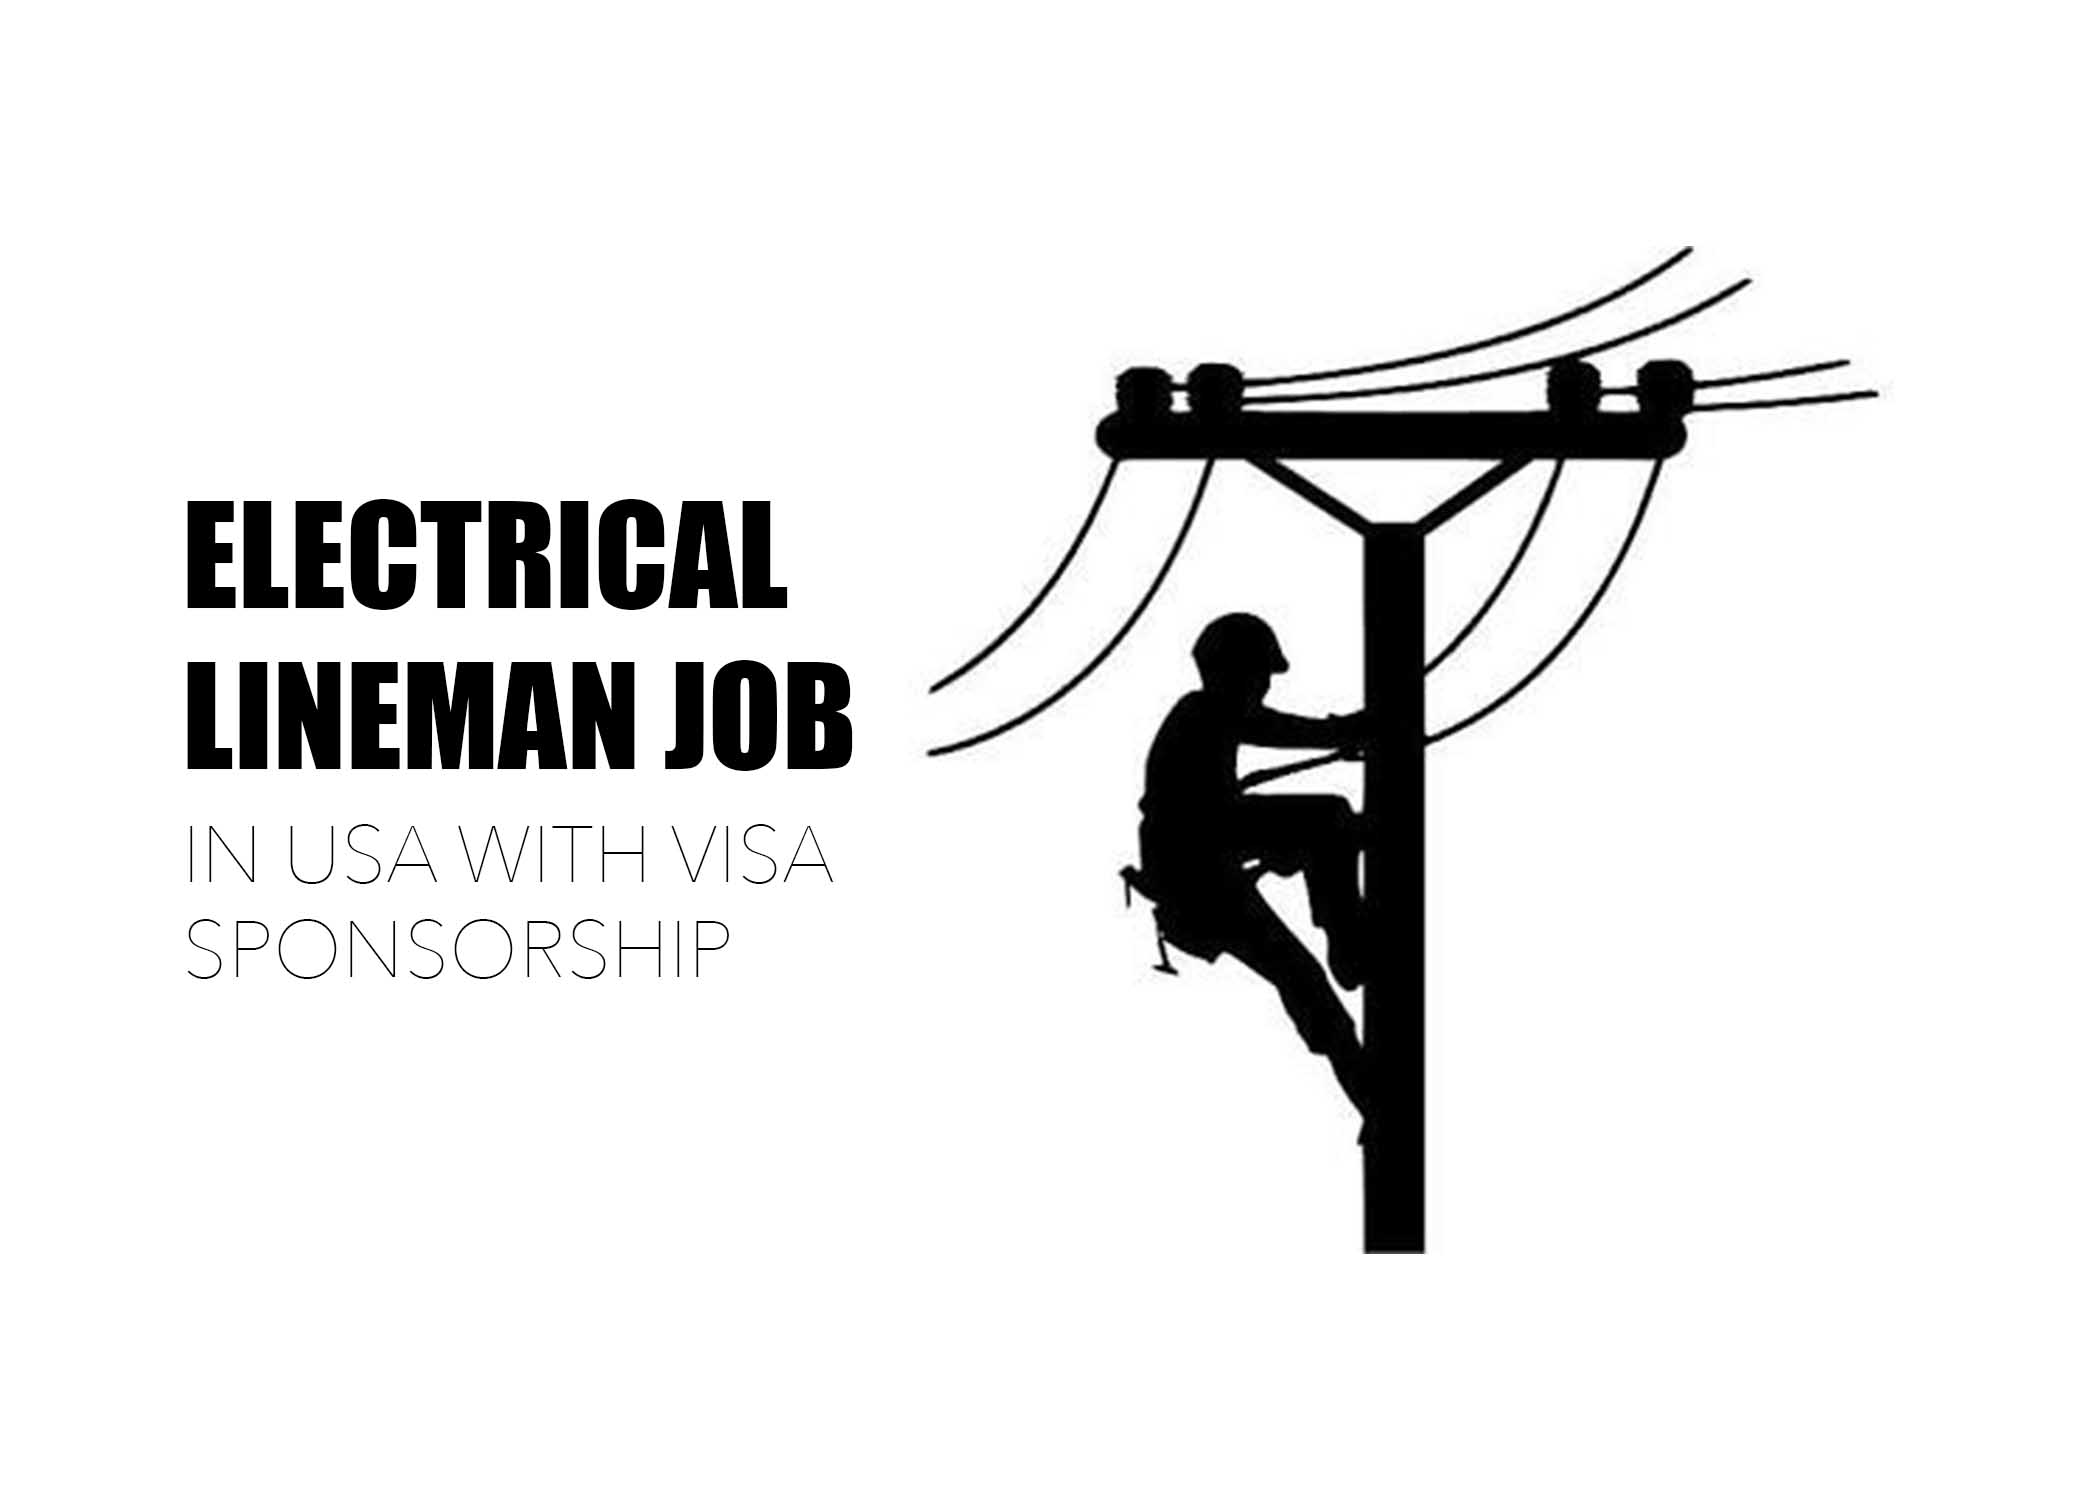 Electrical Lineman Jobs in USA with Visa Sponsorship